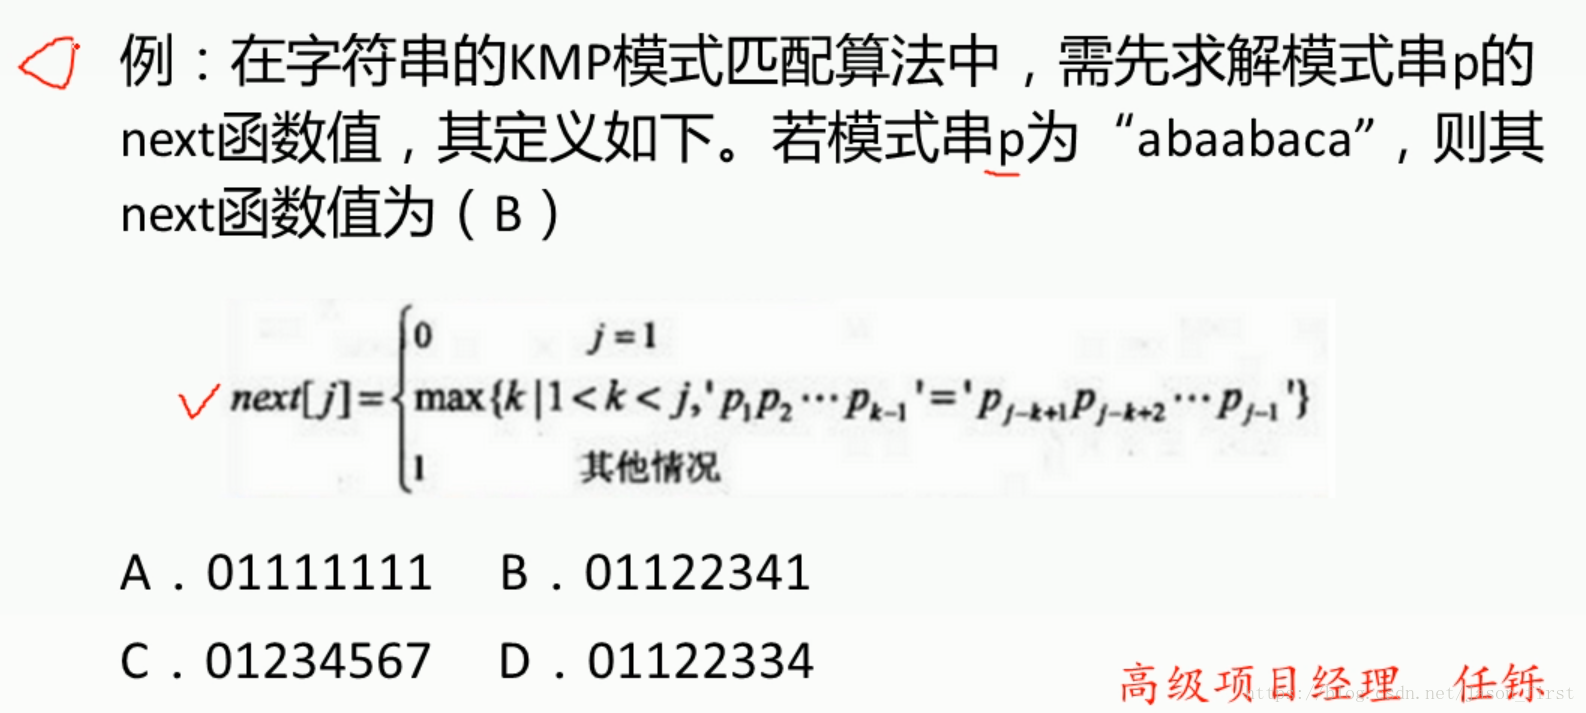 KMP算法例题1